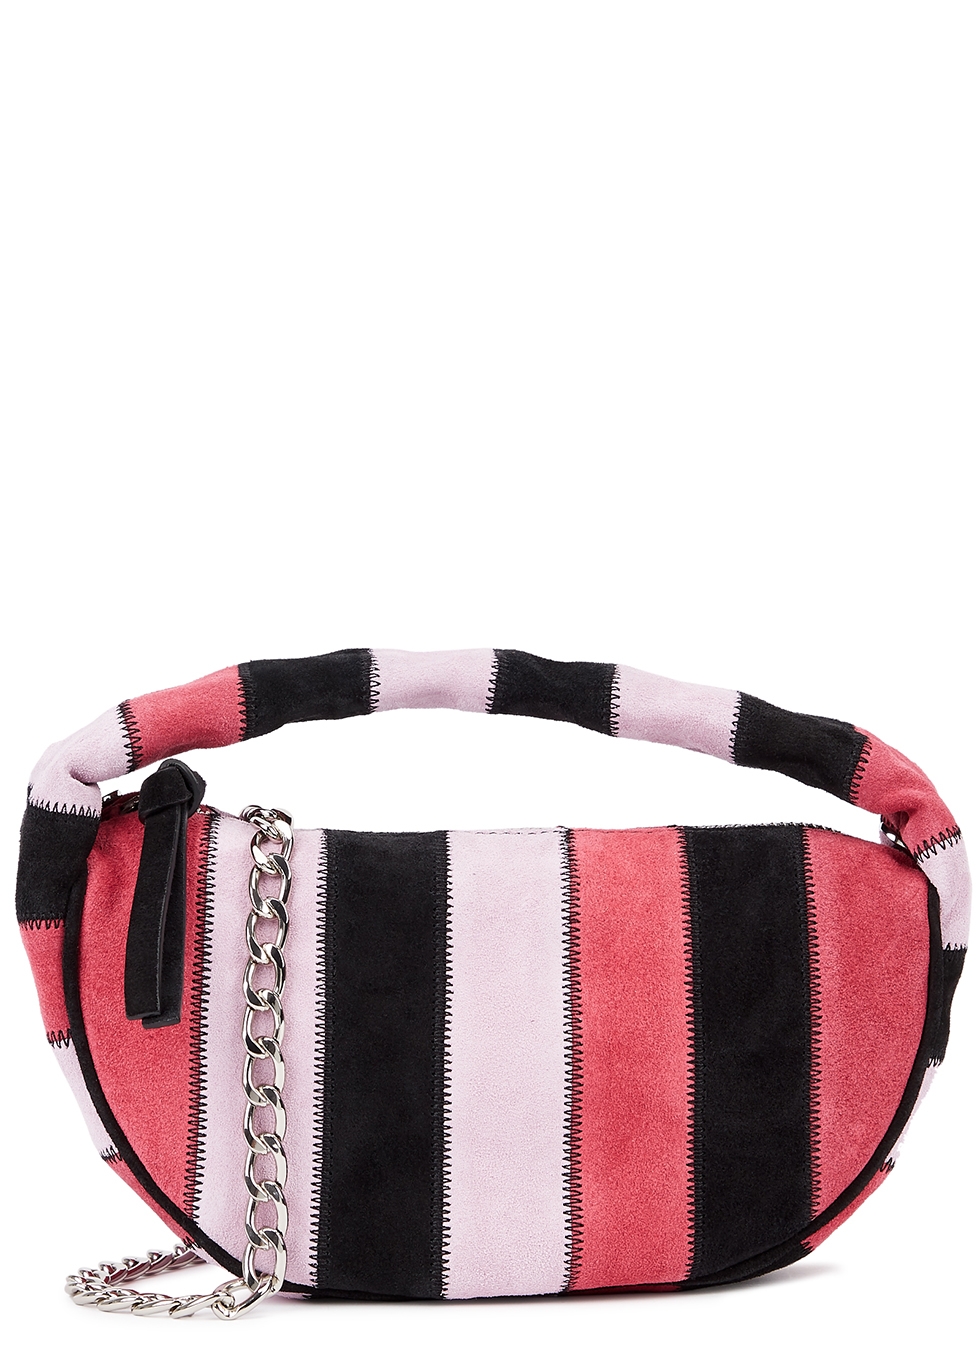 Baby Cush striped suede top handle bag